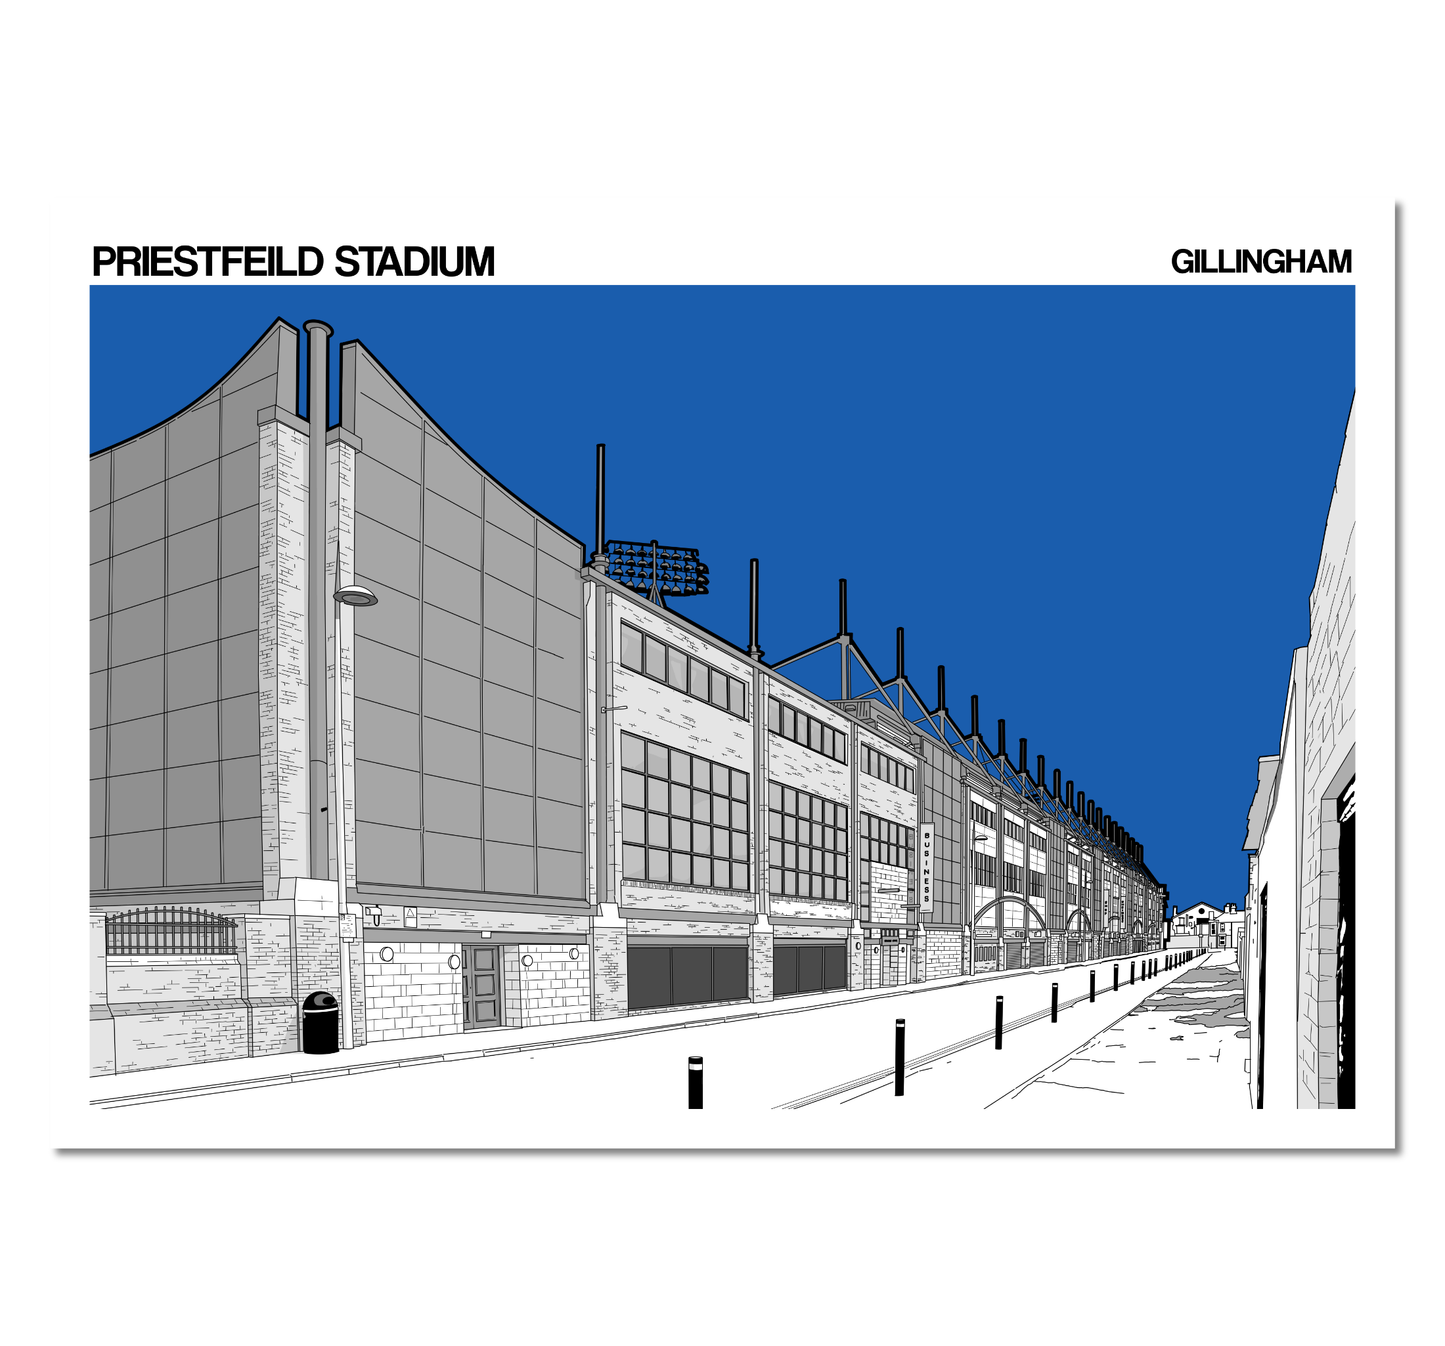 Gillingham FC Art Print of Priestfield Stadium